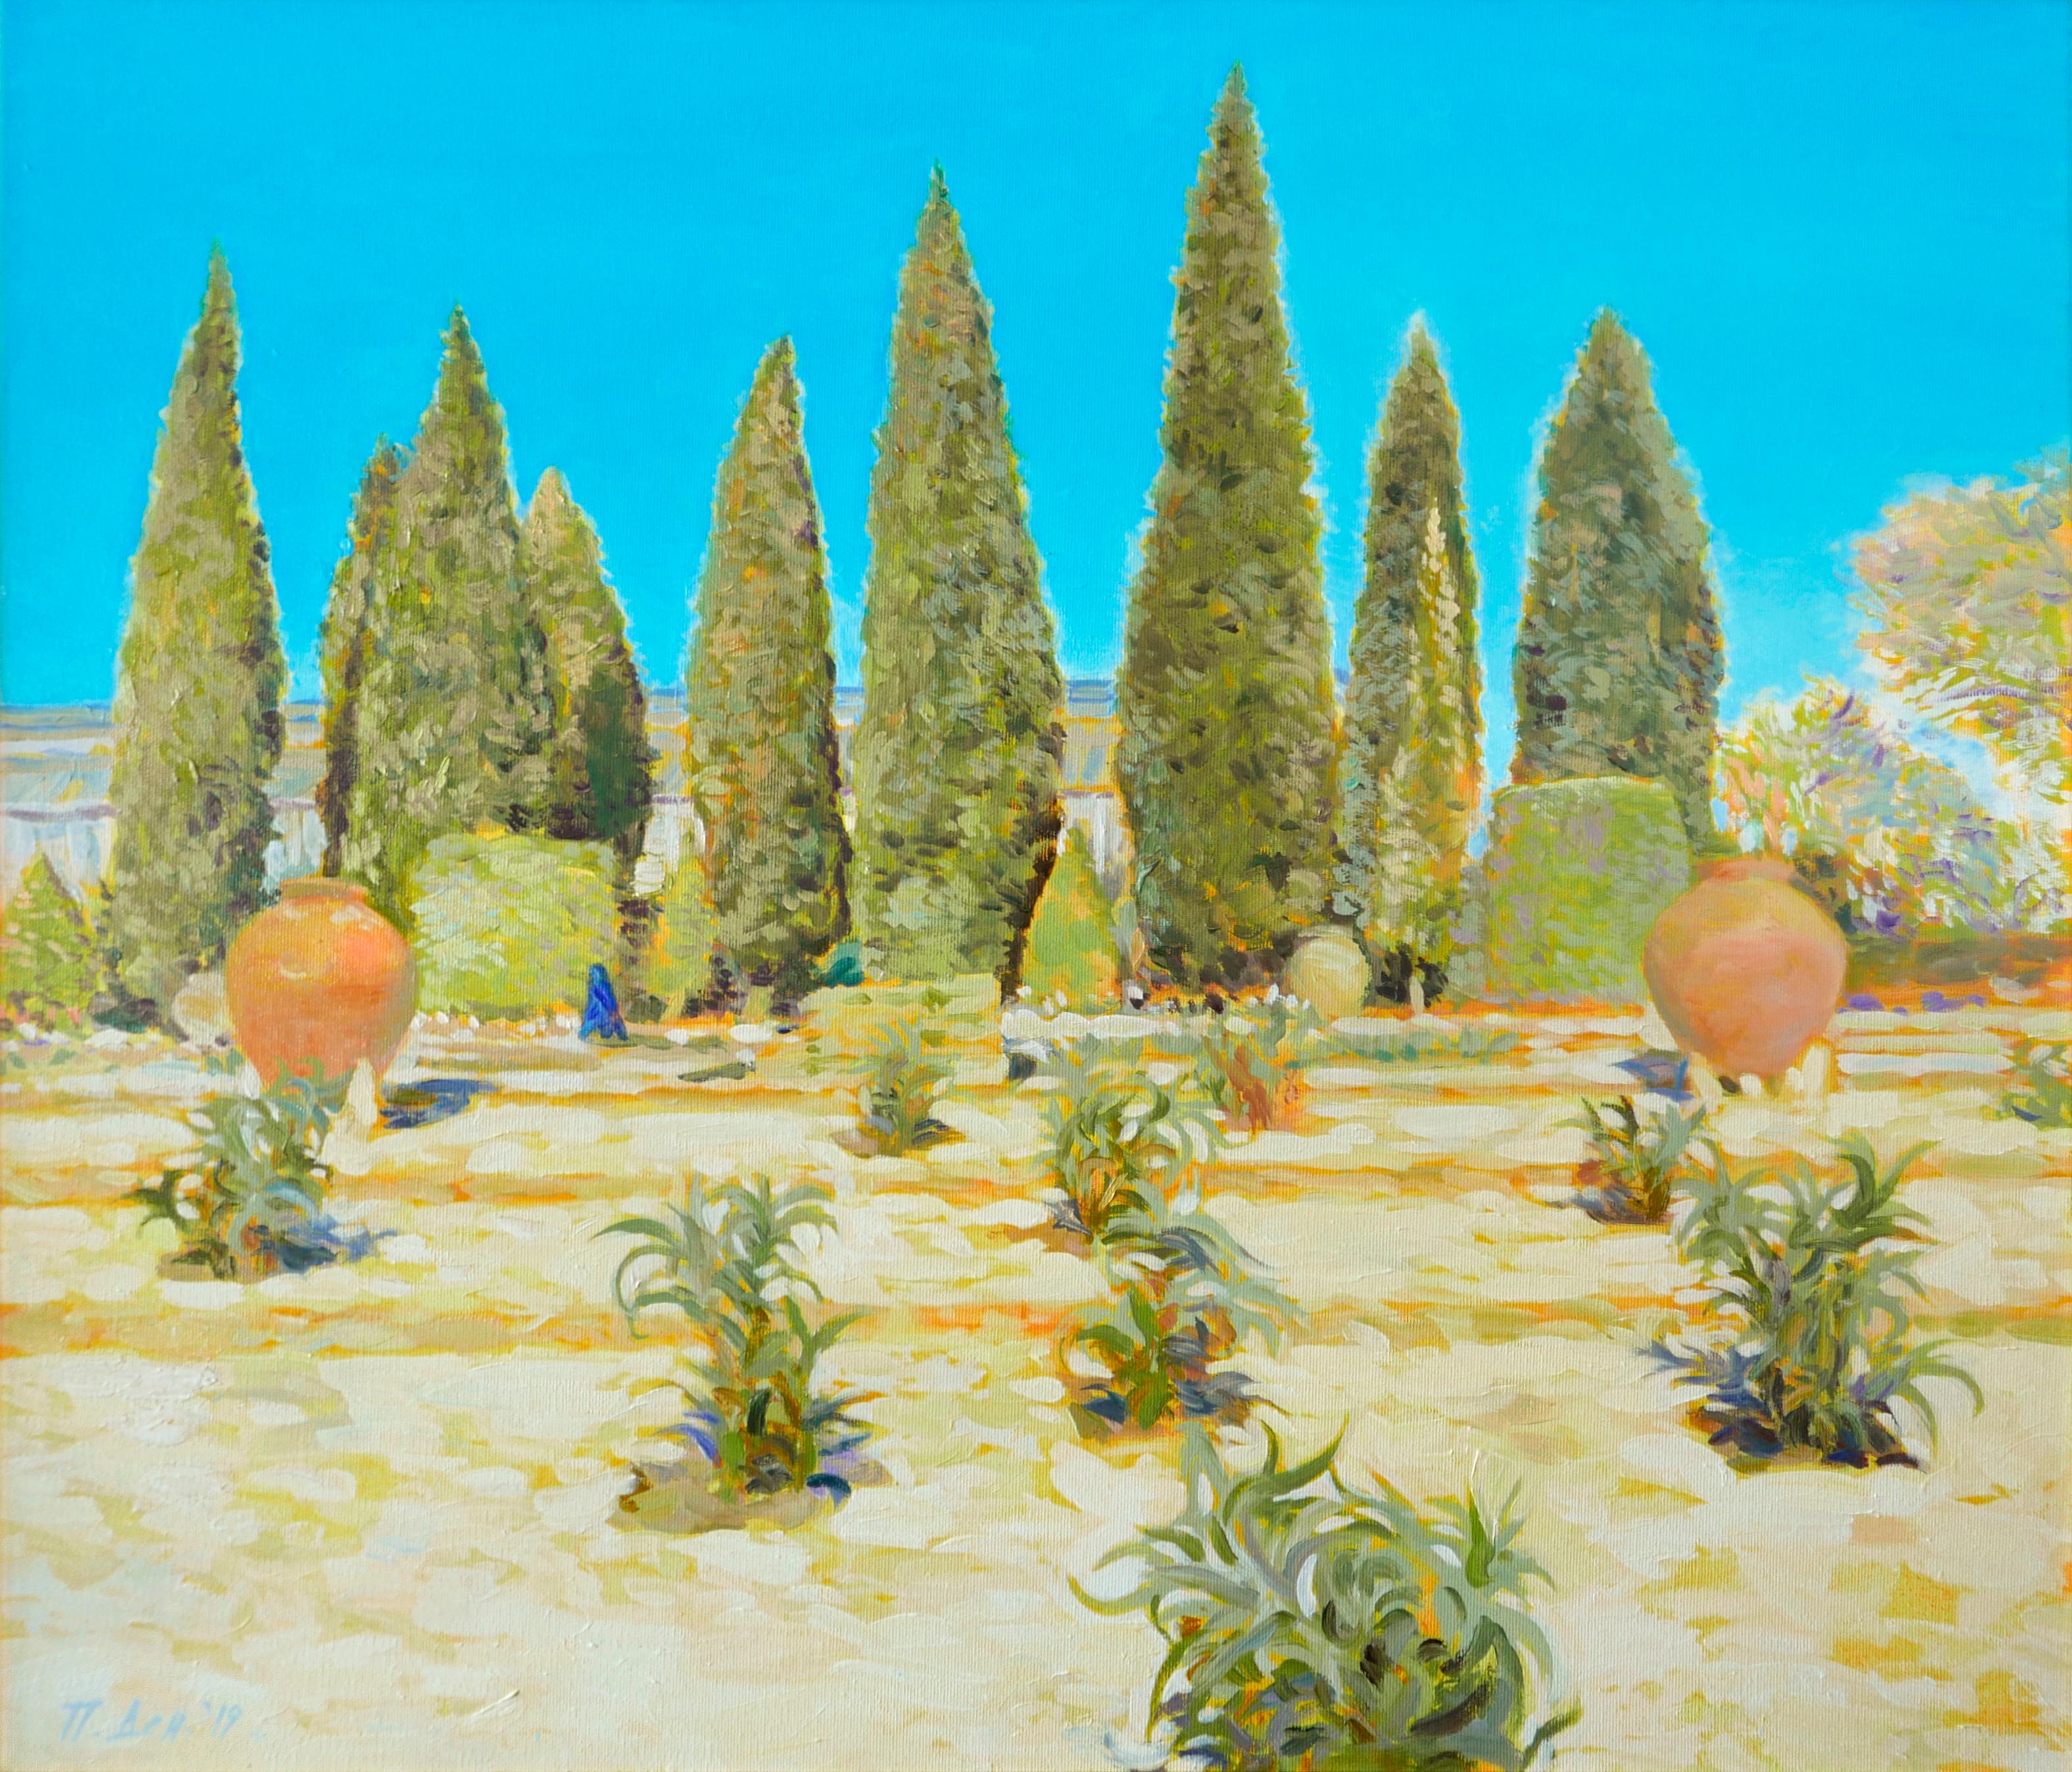 Petya Deneva Landscape Painting - The Garden  - Oil Painting Colors Brown White Yellow Green Orange Blue 